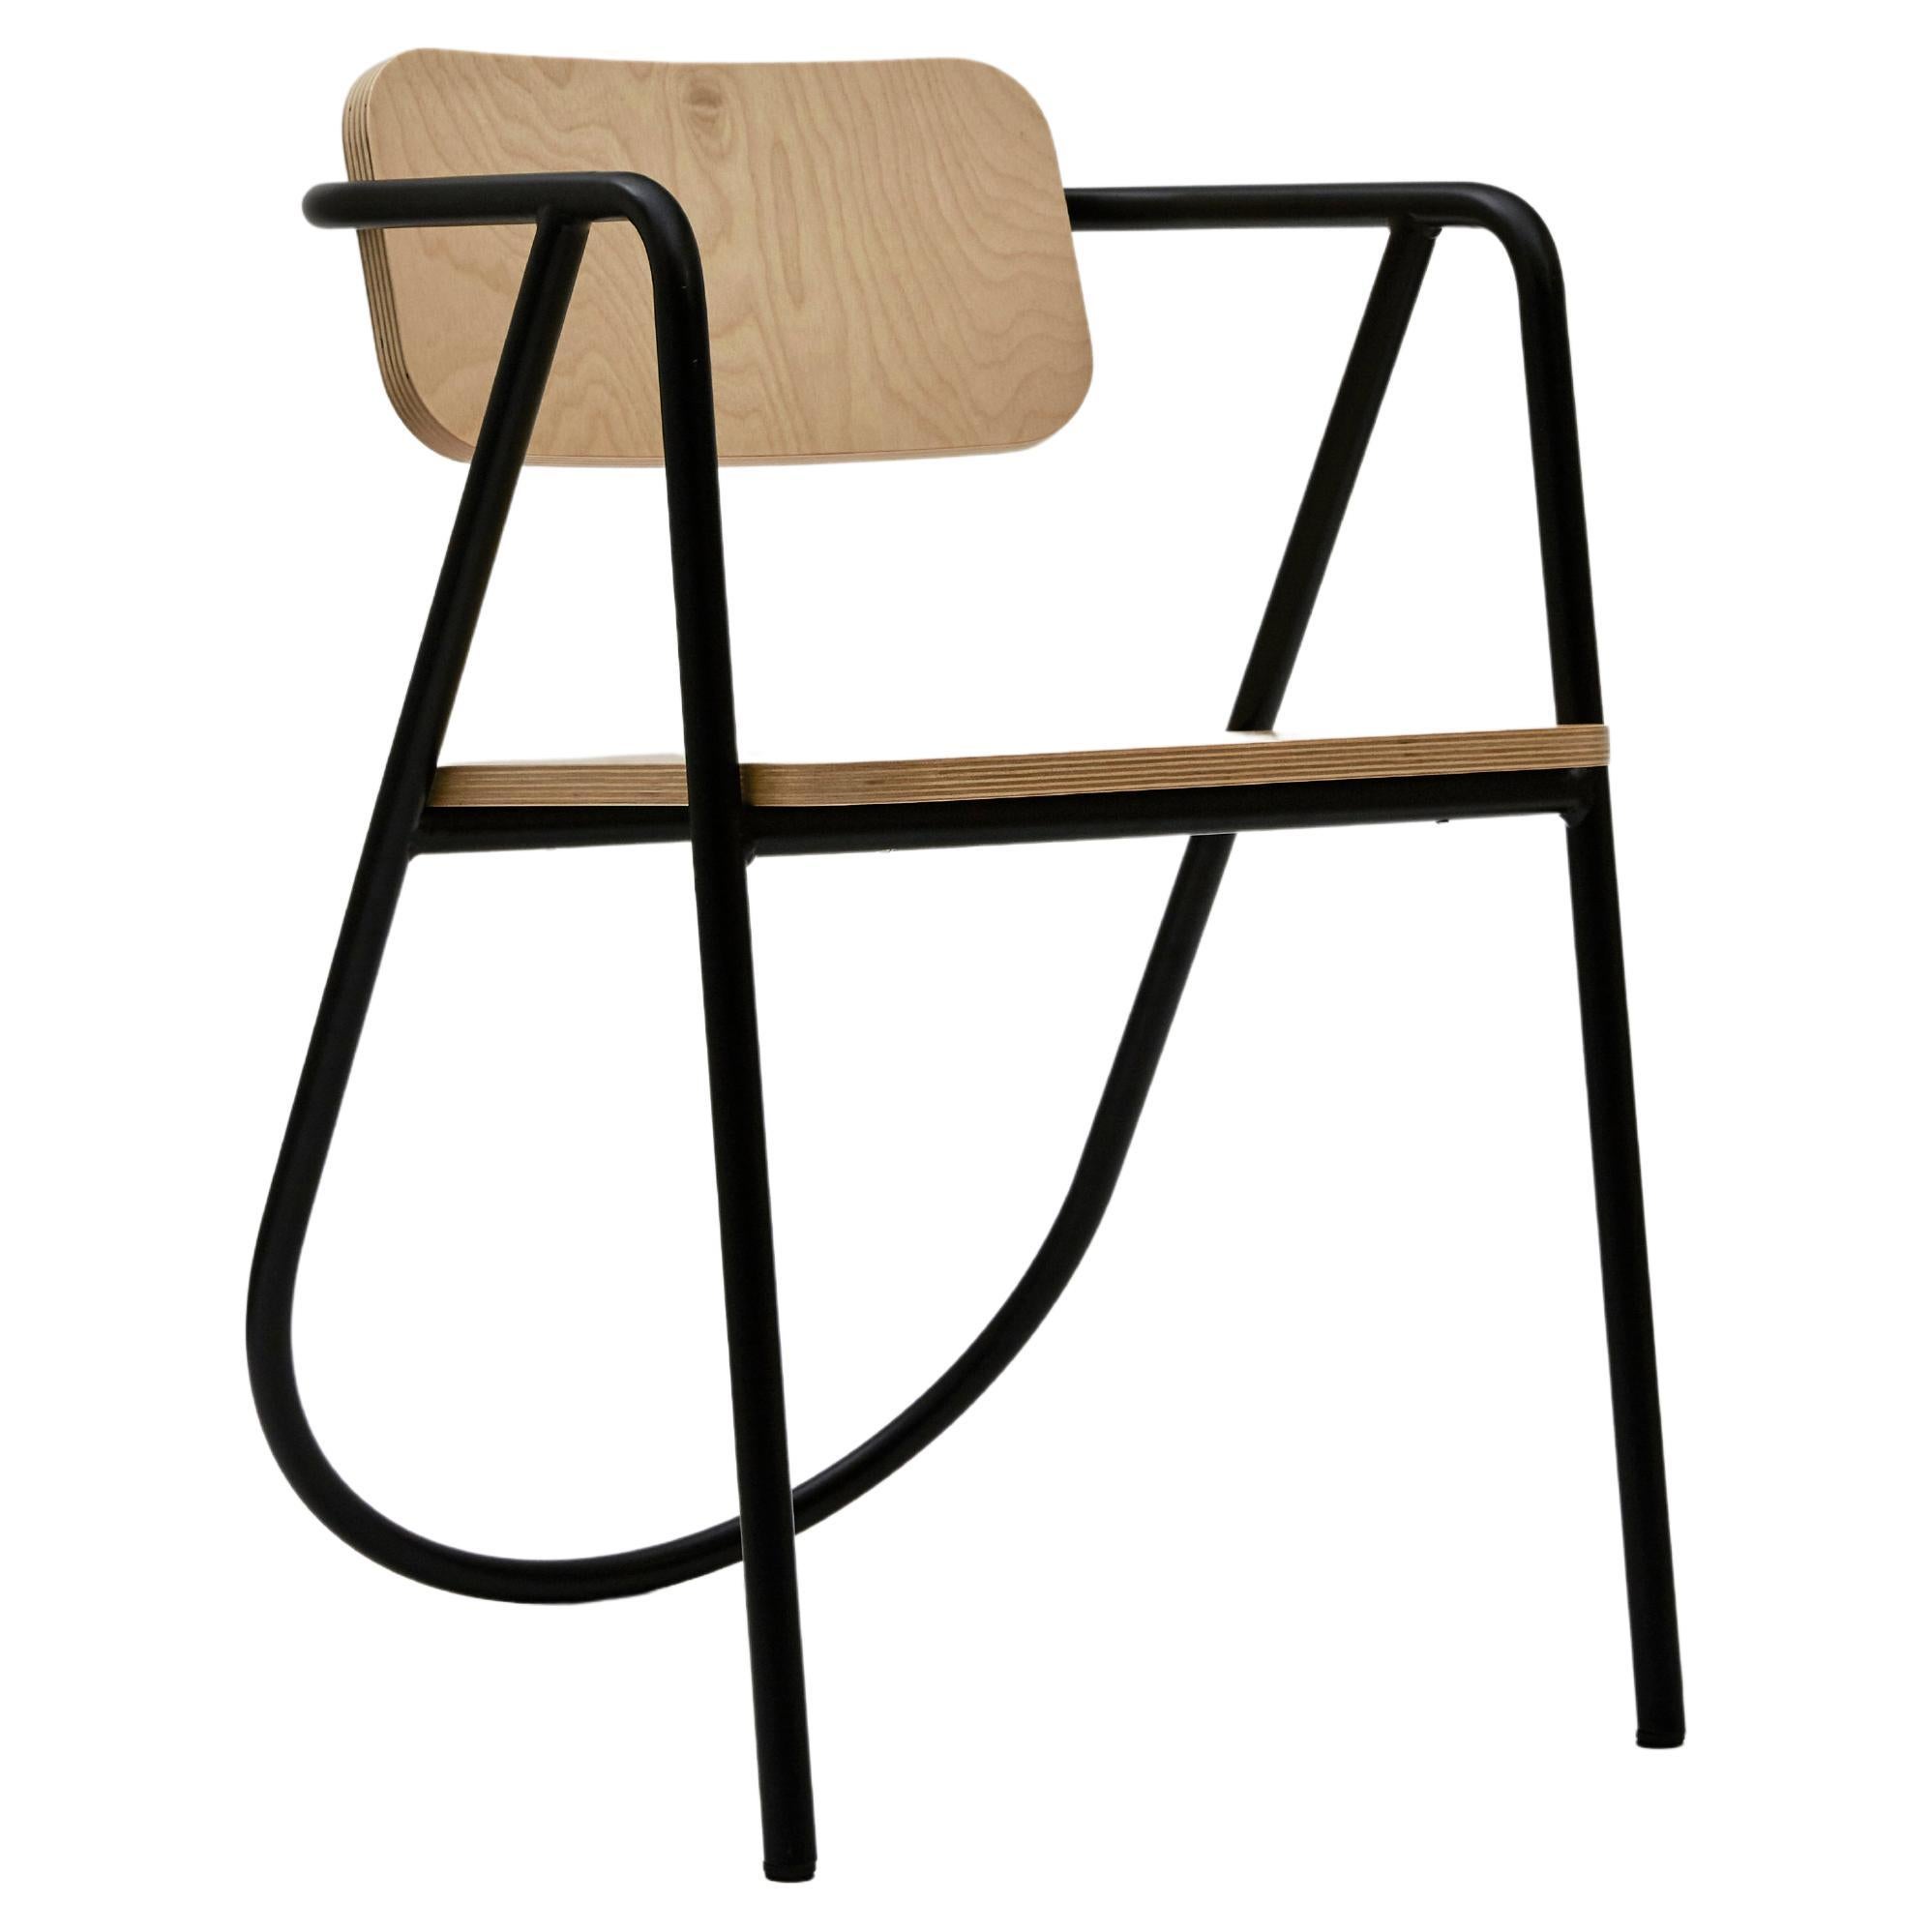 La Misciù Chair, Light Wooden & Black